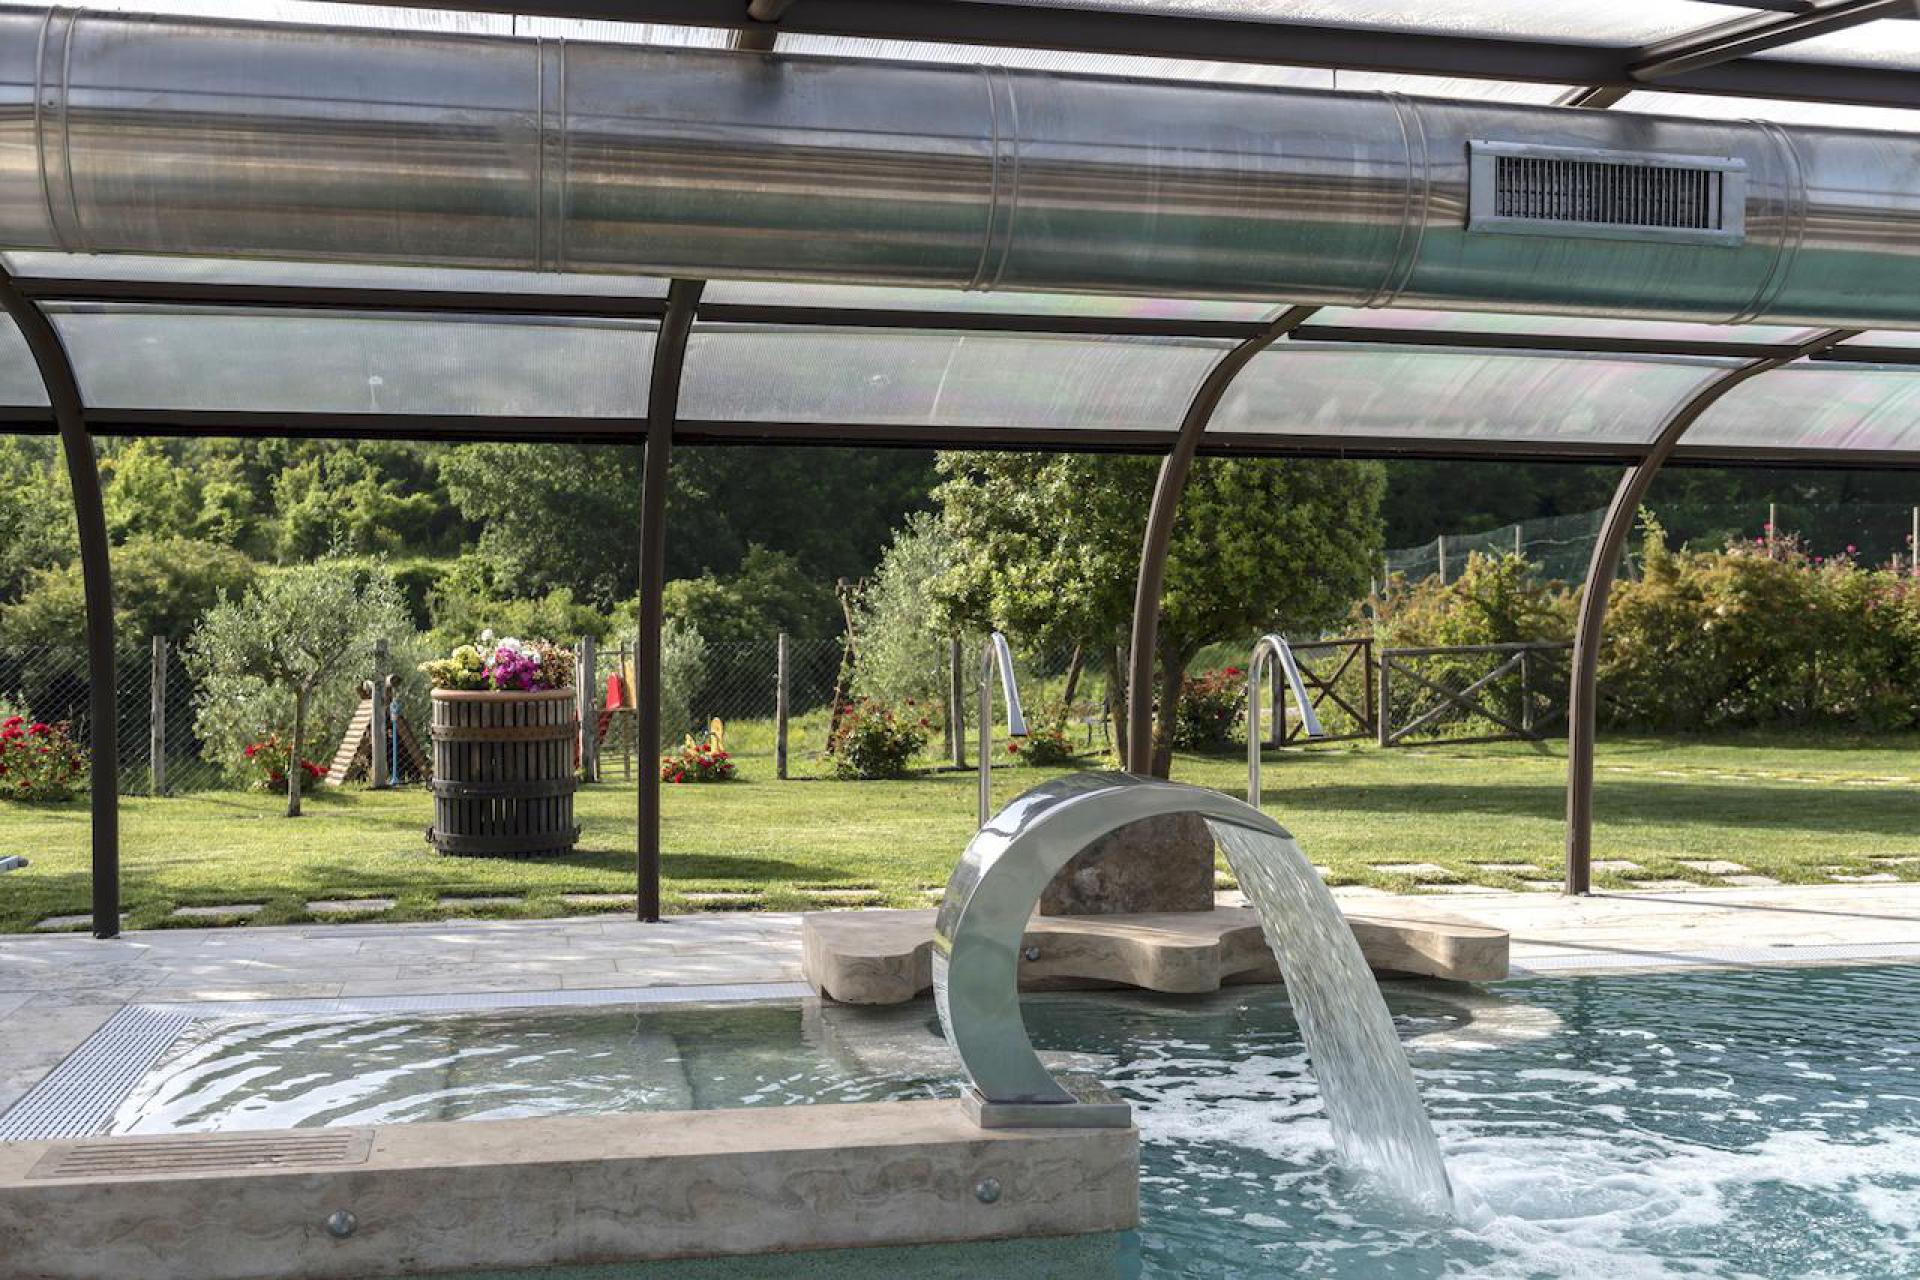 Agriturismo Toscana Resort di campagna in Toscana con bellissima piscina